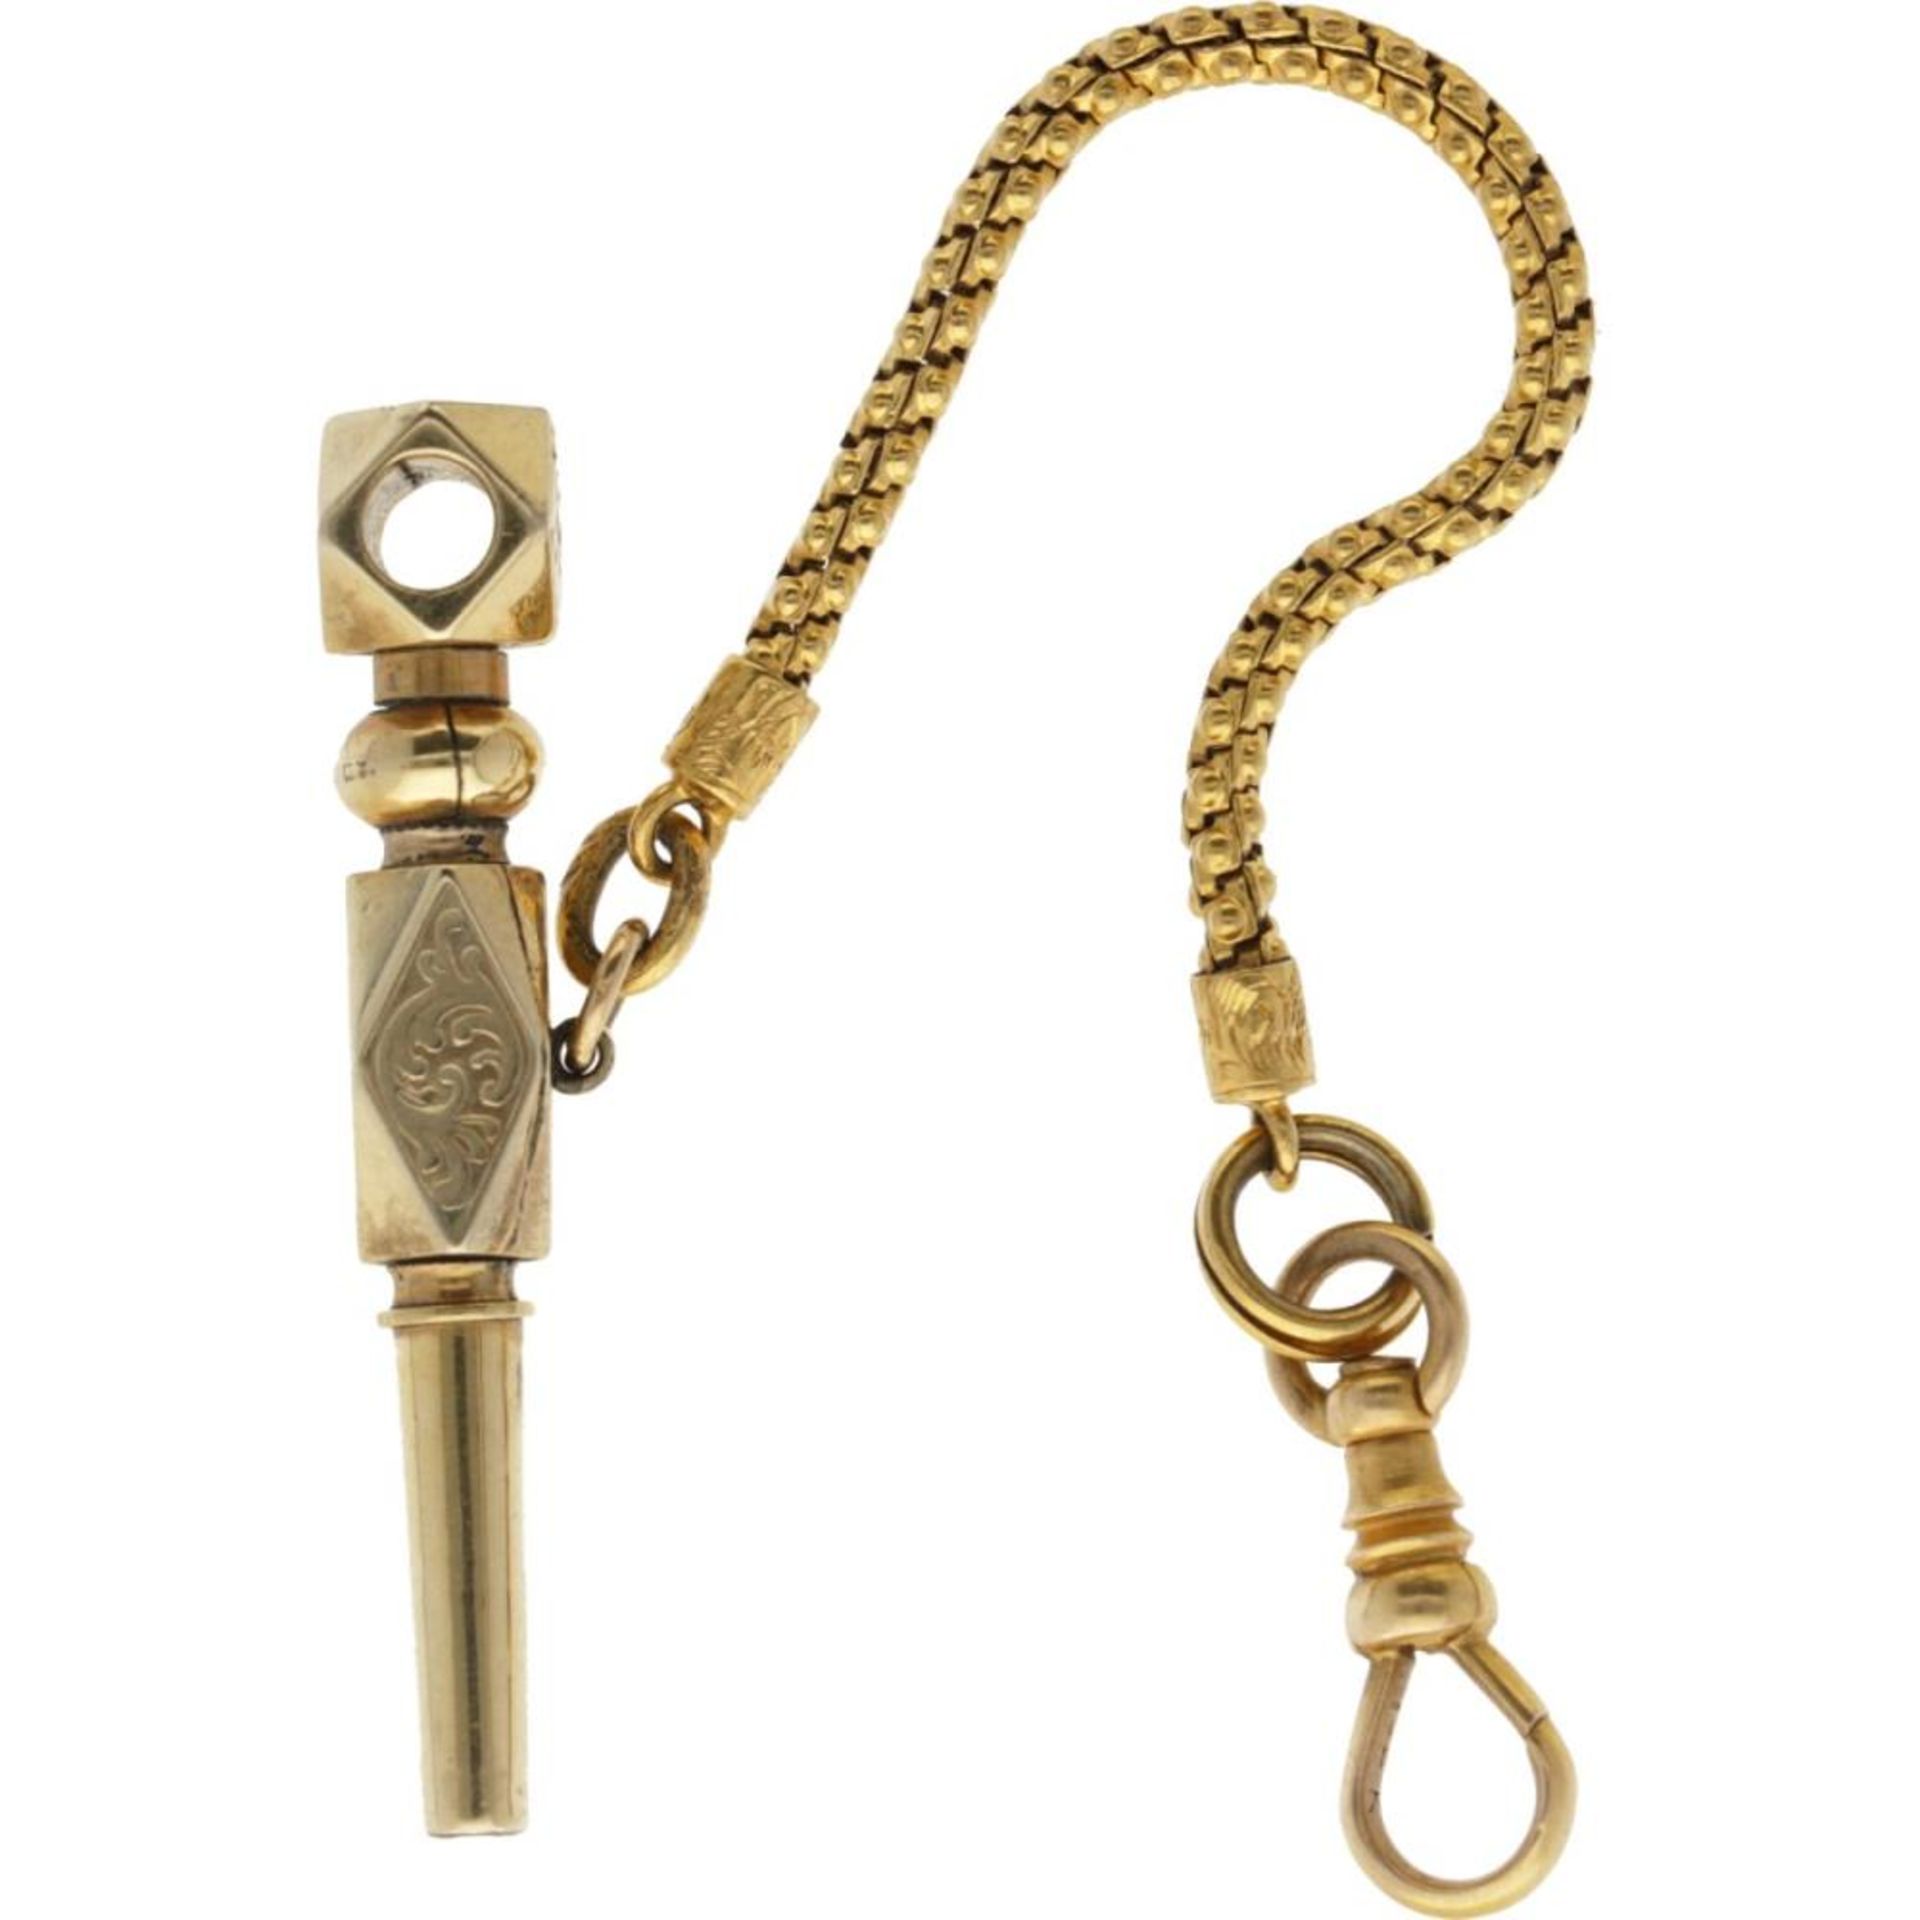 Pocket watch key with chain, gold-plated. - Bild 3 aus 3